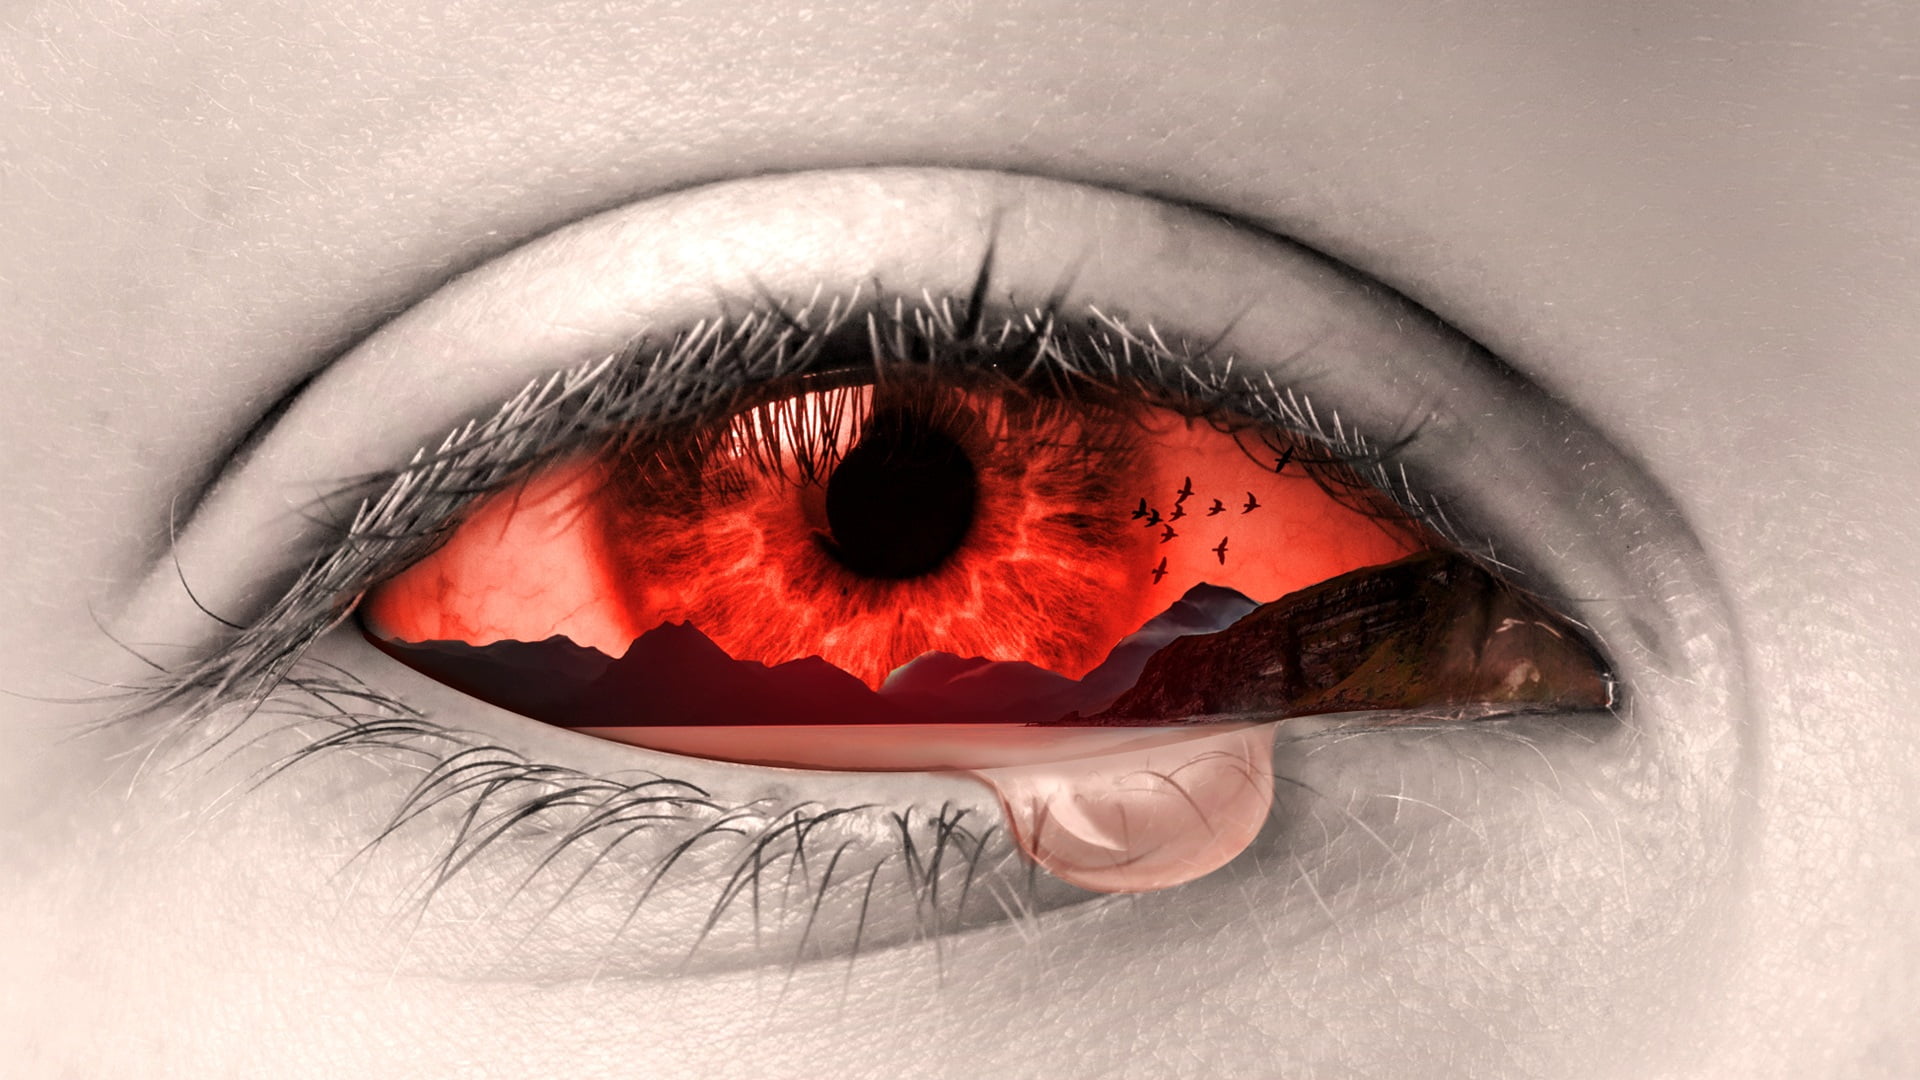 Crying Red eye illustration